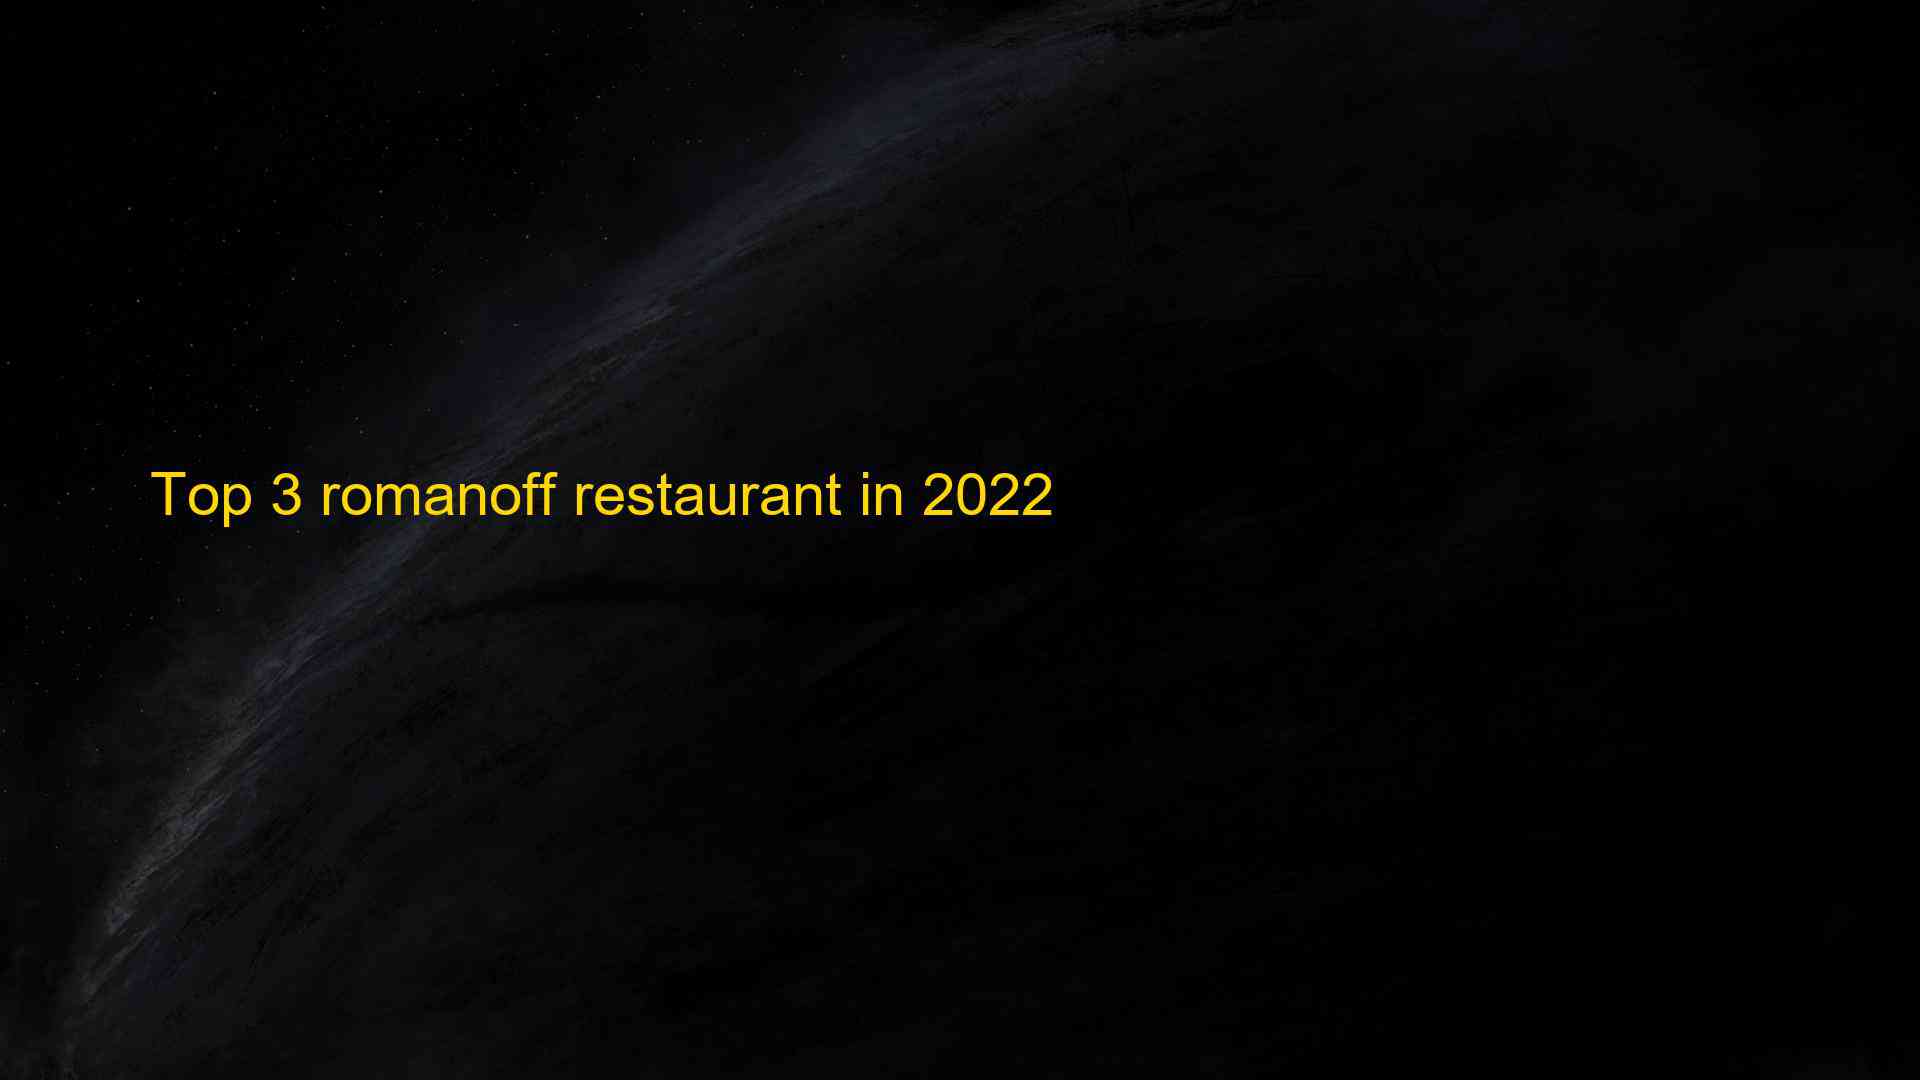 Top 3 romanoff restaurant in 2022 1663395587